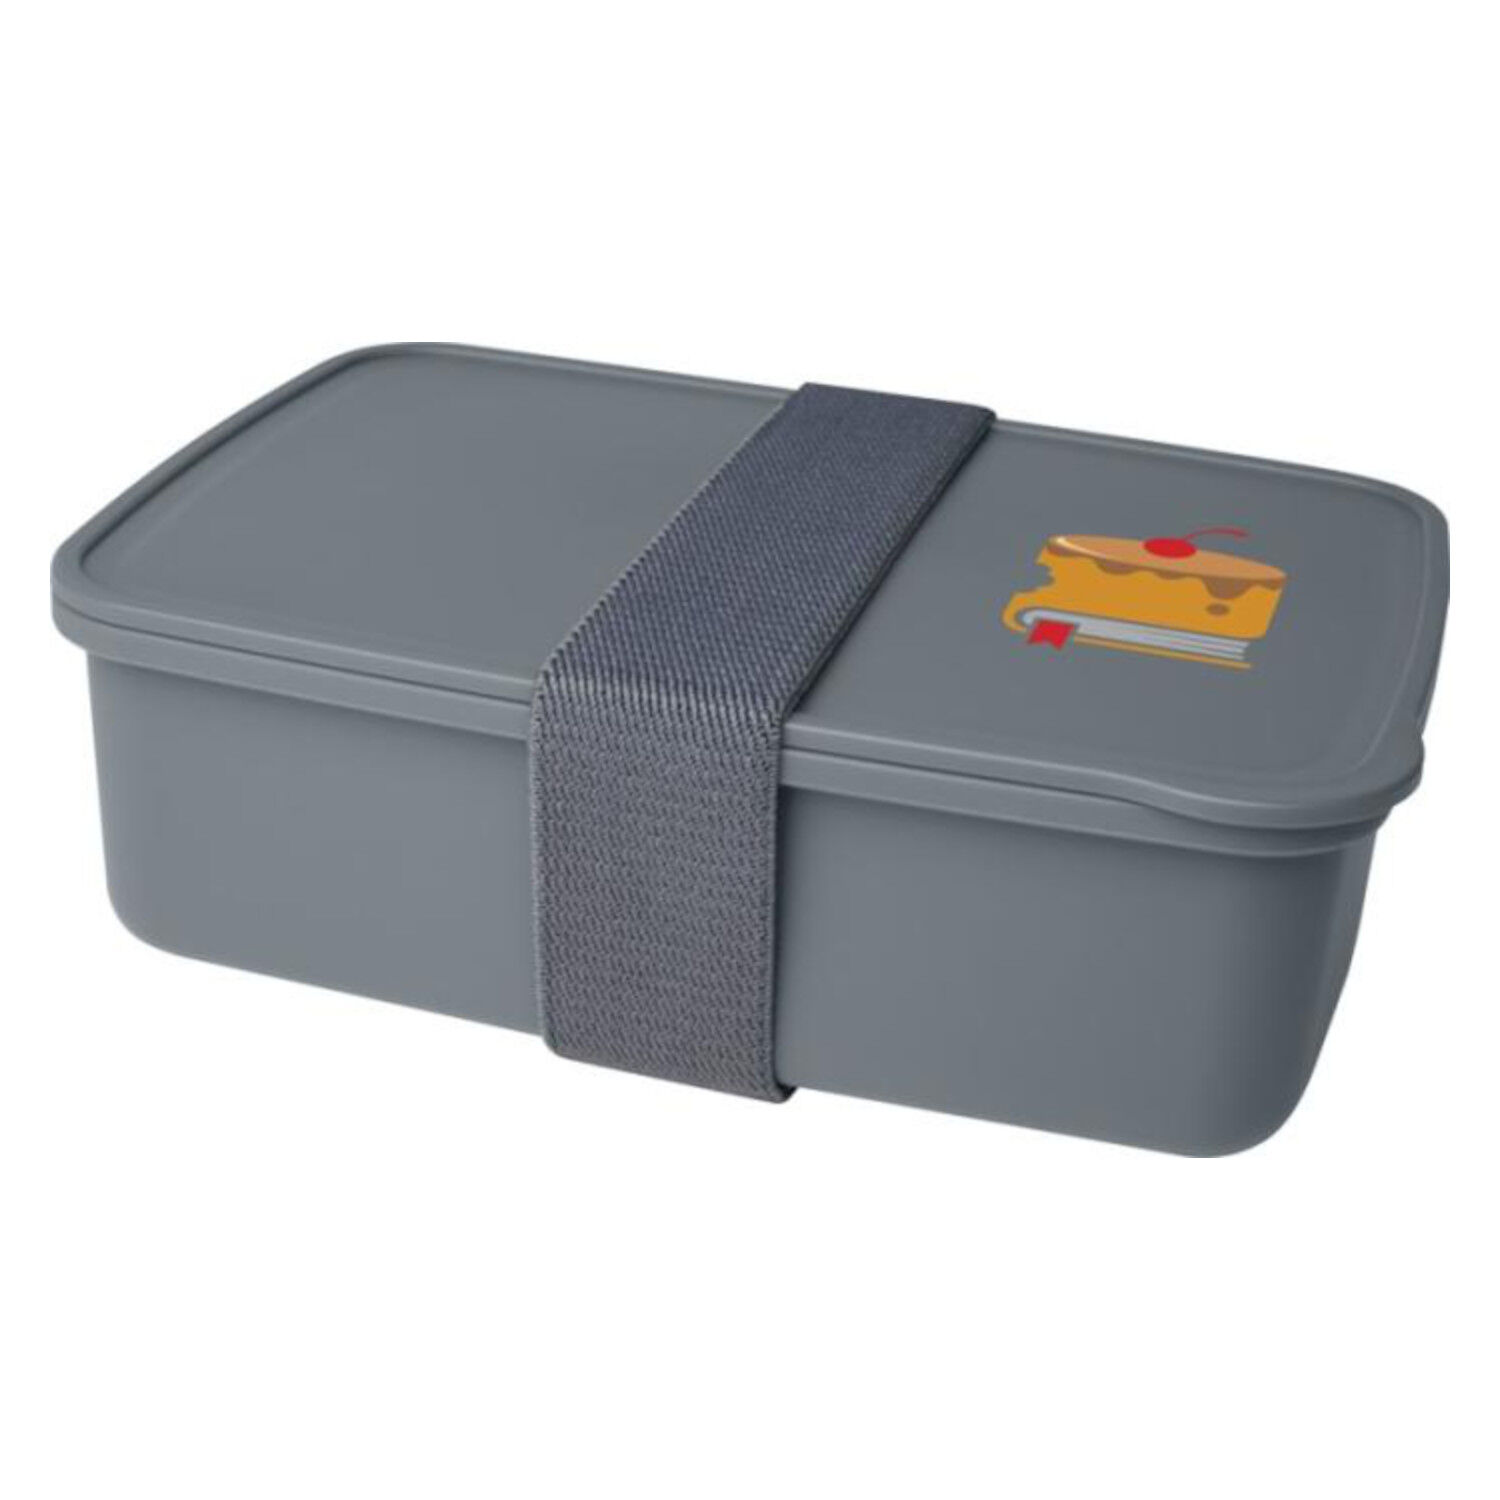 Dovi Box (grey with sample branding)